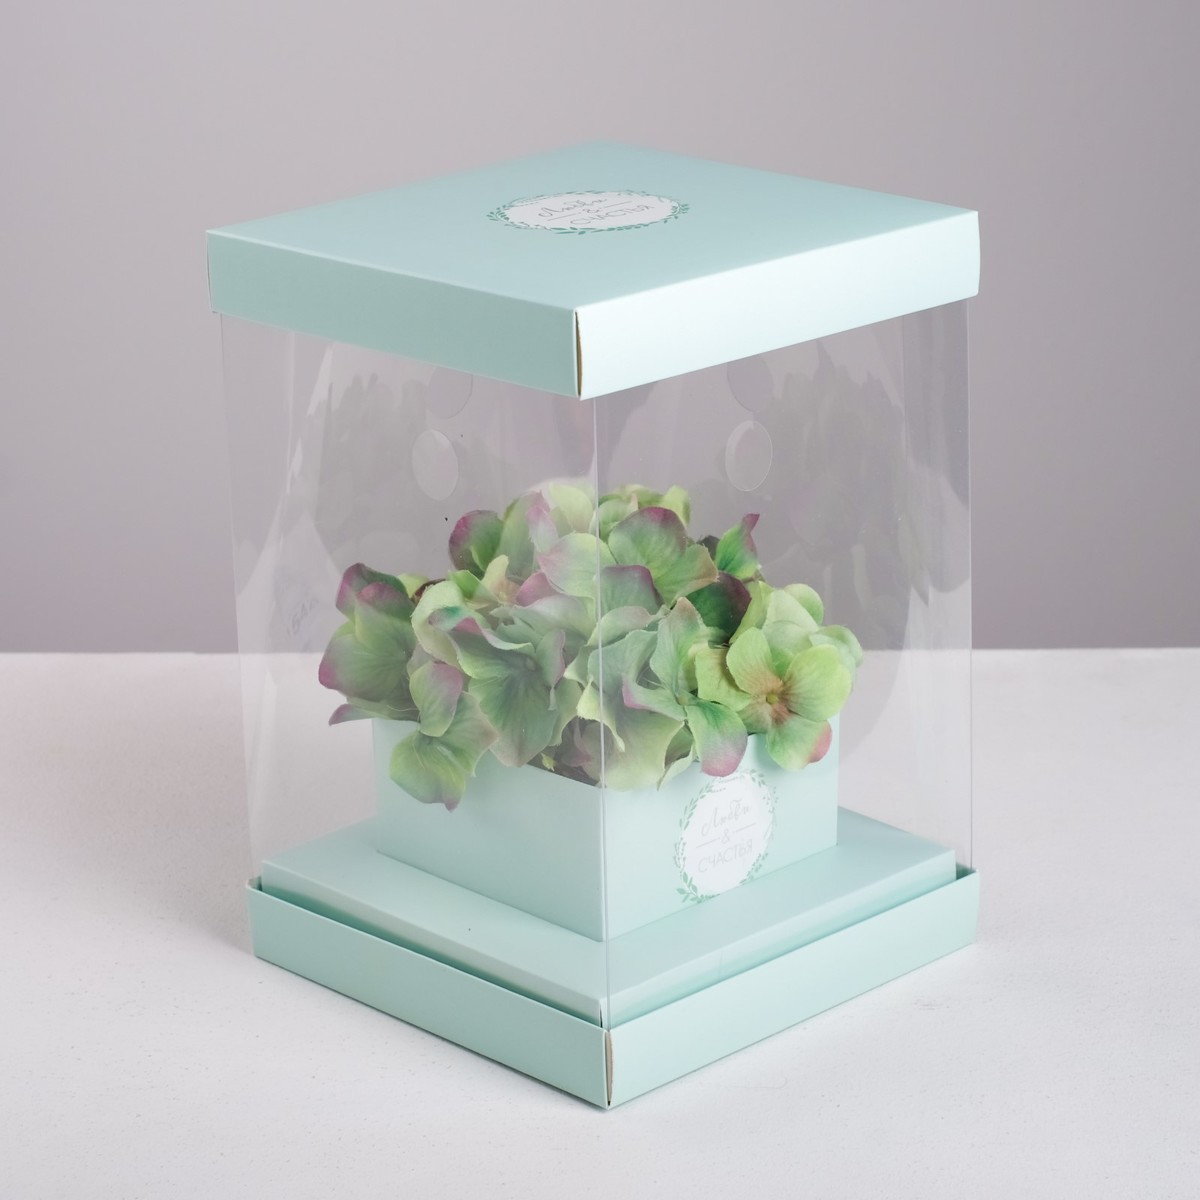 Коробка подарочная для цветов с вазой и pvc окнами складная, упаковка, коробка для ов с вазой и pvc окнами складная розовый 23 х 30 х 23 см